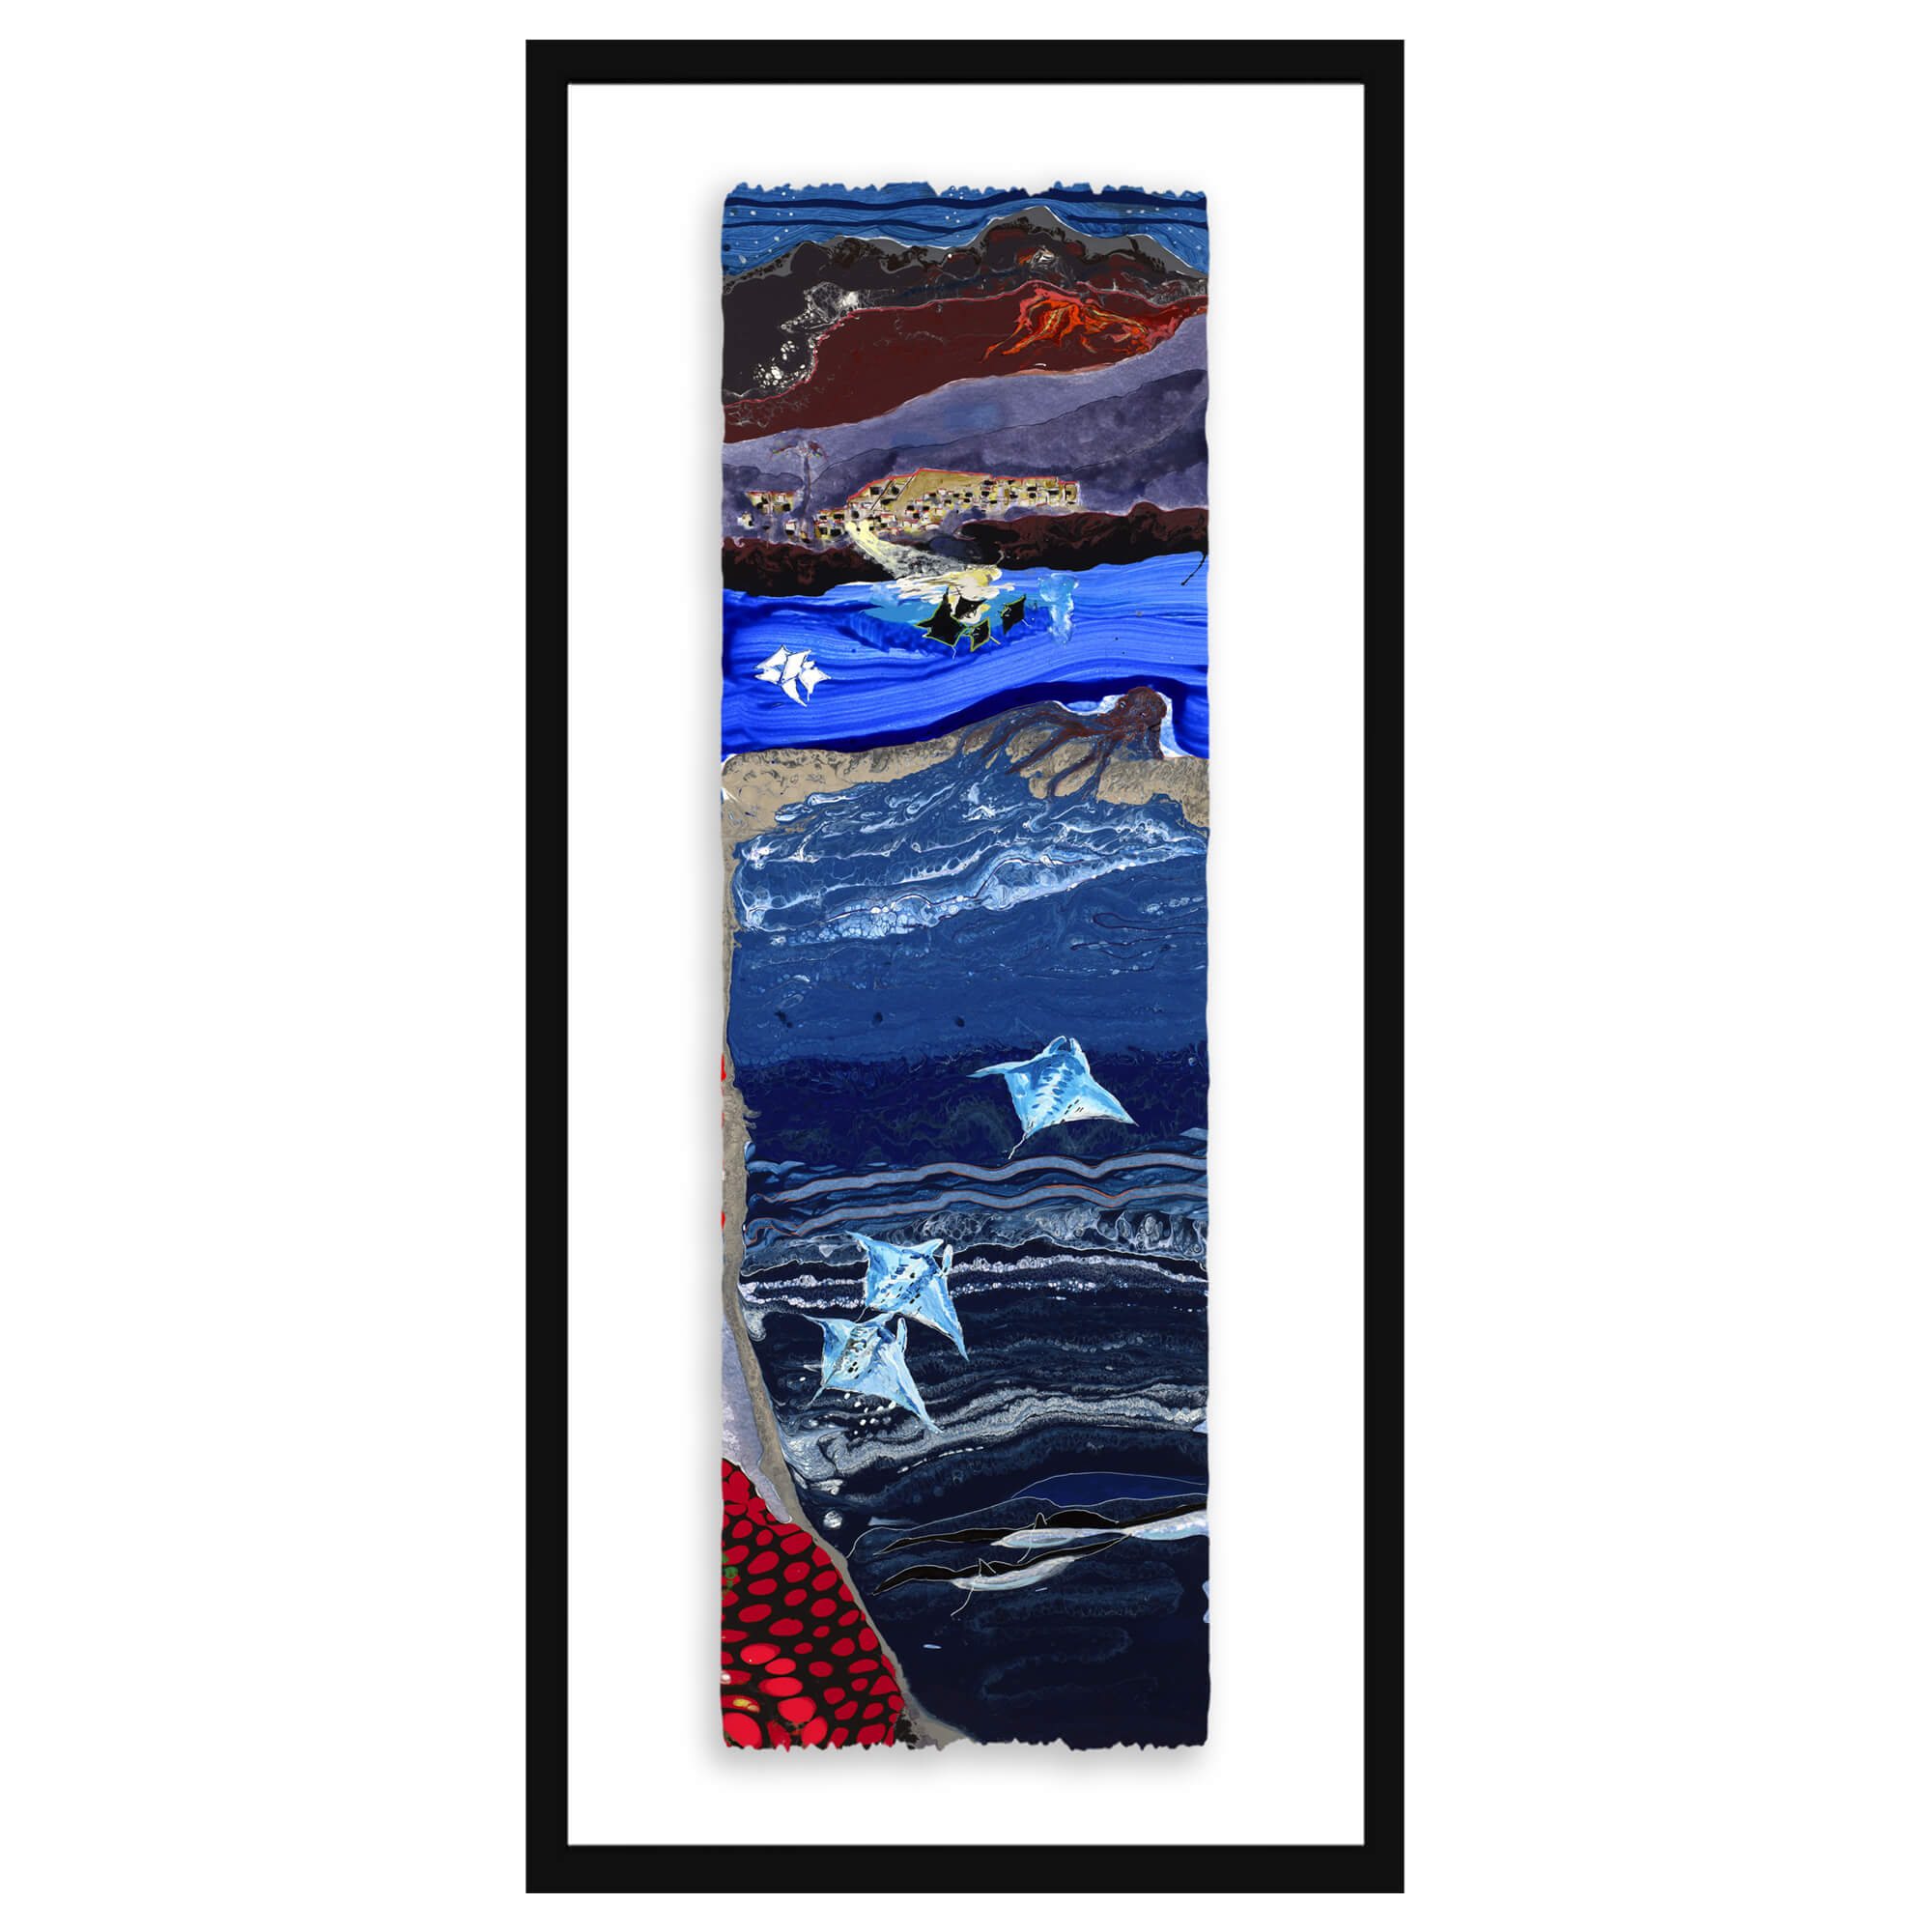 art print featuring an abstract painting of the ocean floor by Hawaii artist Robert Hazzard